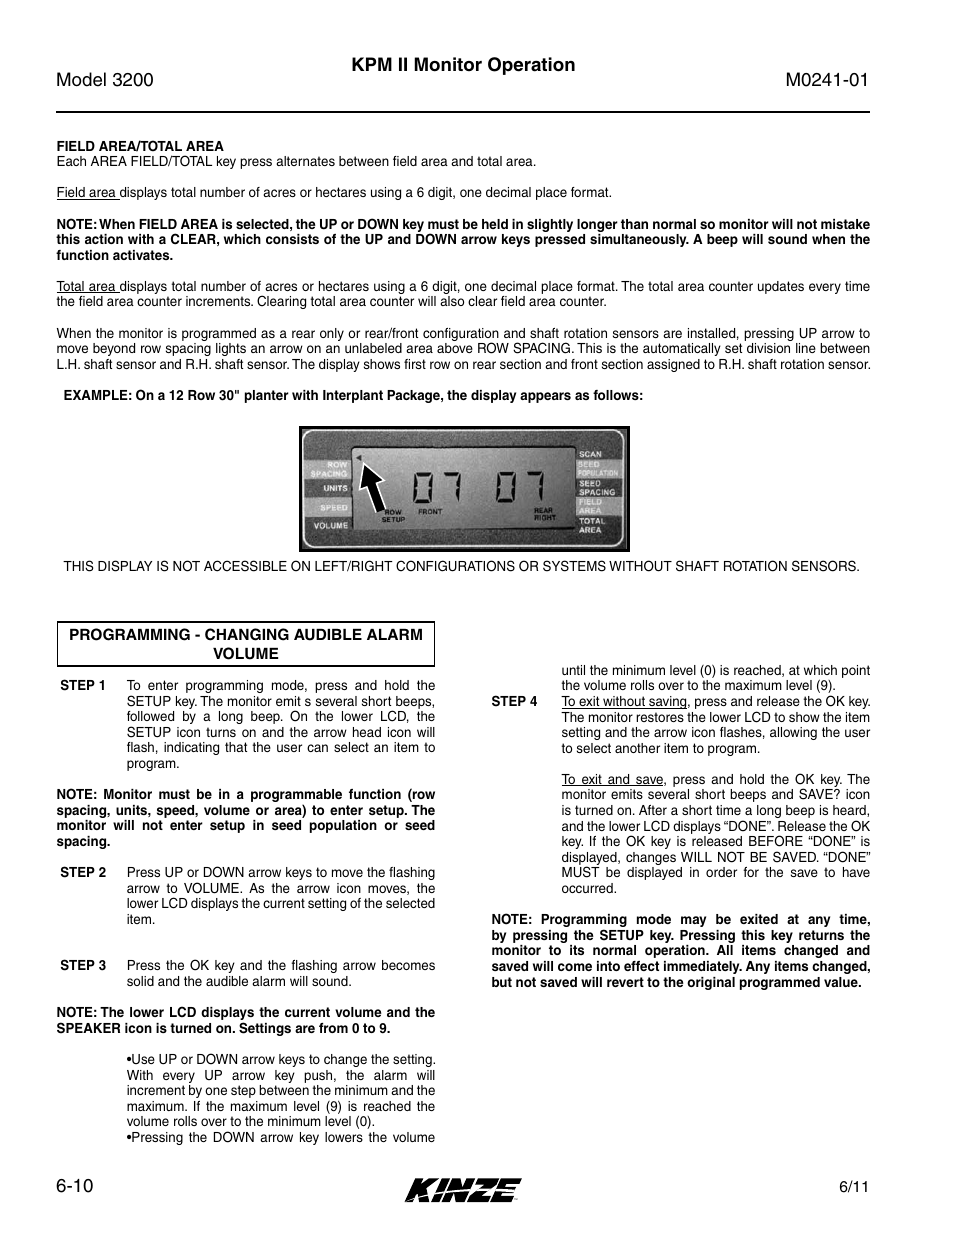 Programming - changing audible alarm volume -10, Kpm ii monitor operation | Kinze 3200 Wing-Fold Planter Rev. 7/14 User Manual | Page 100 / 192